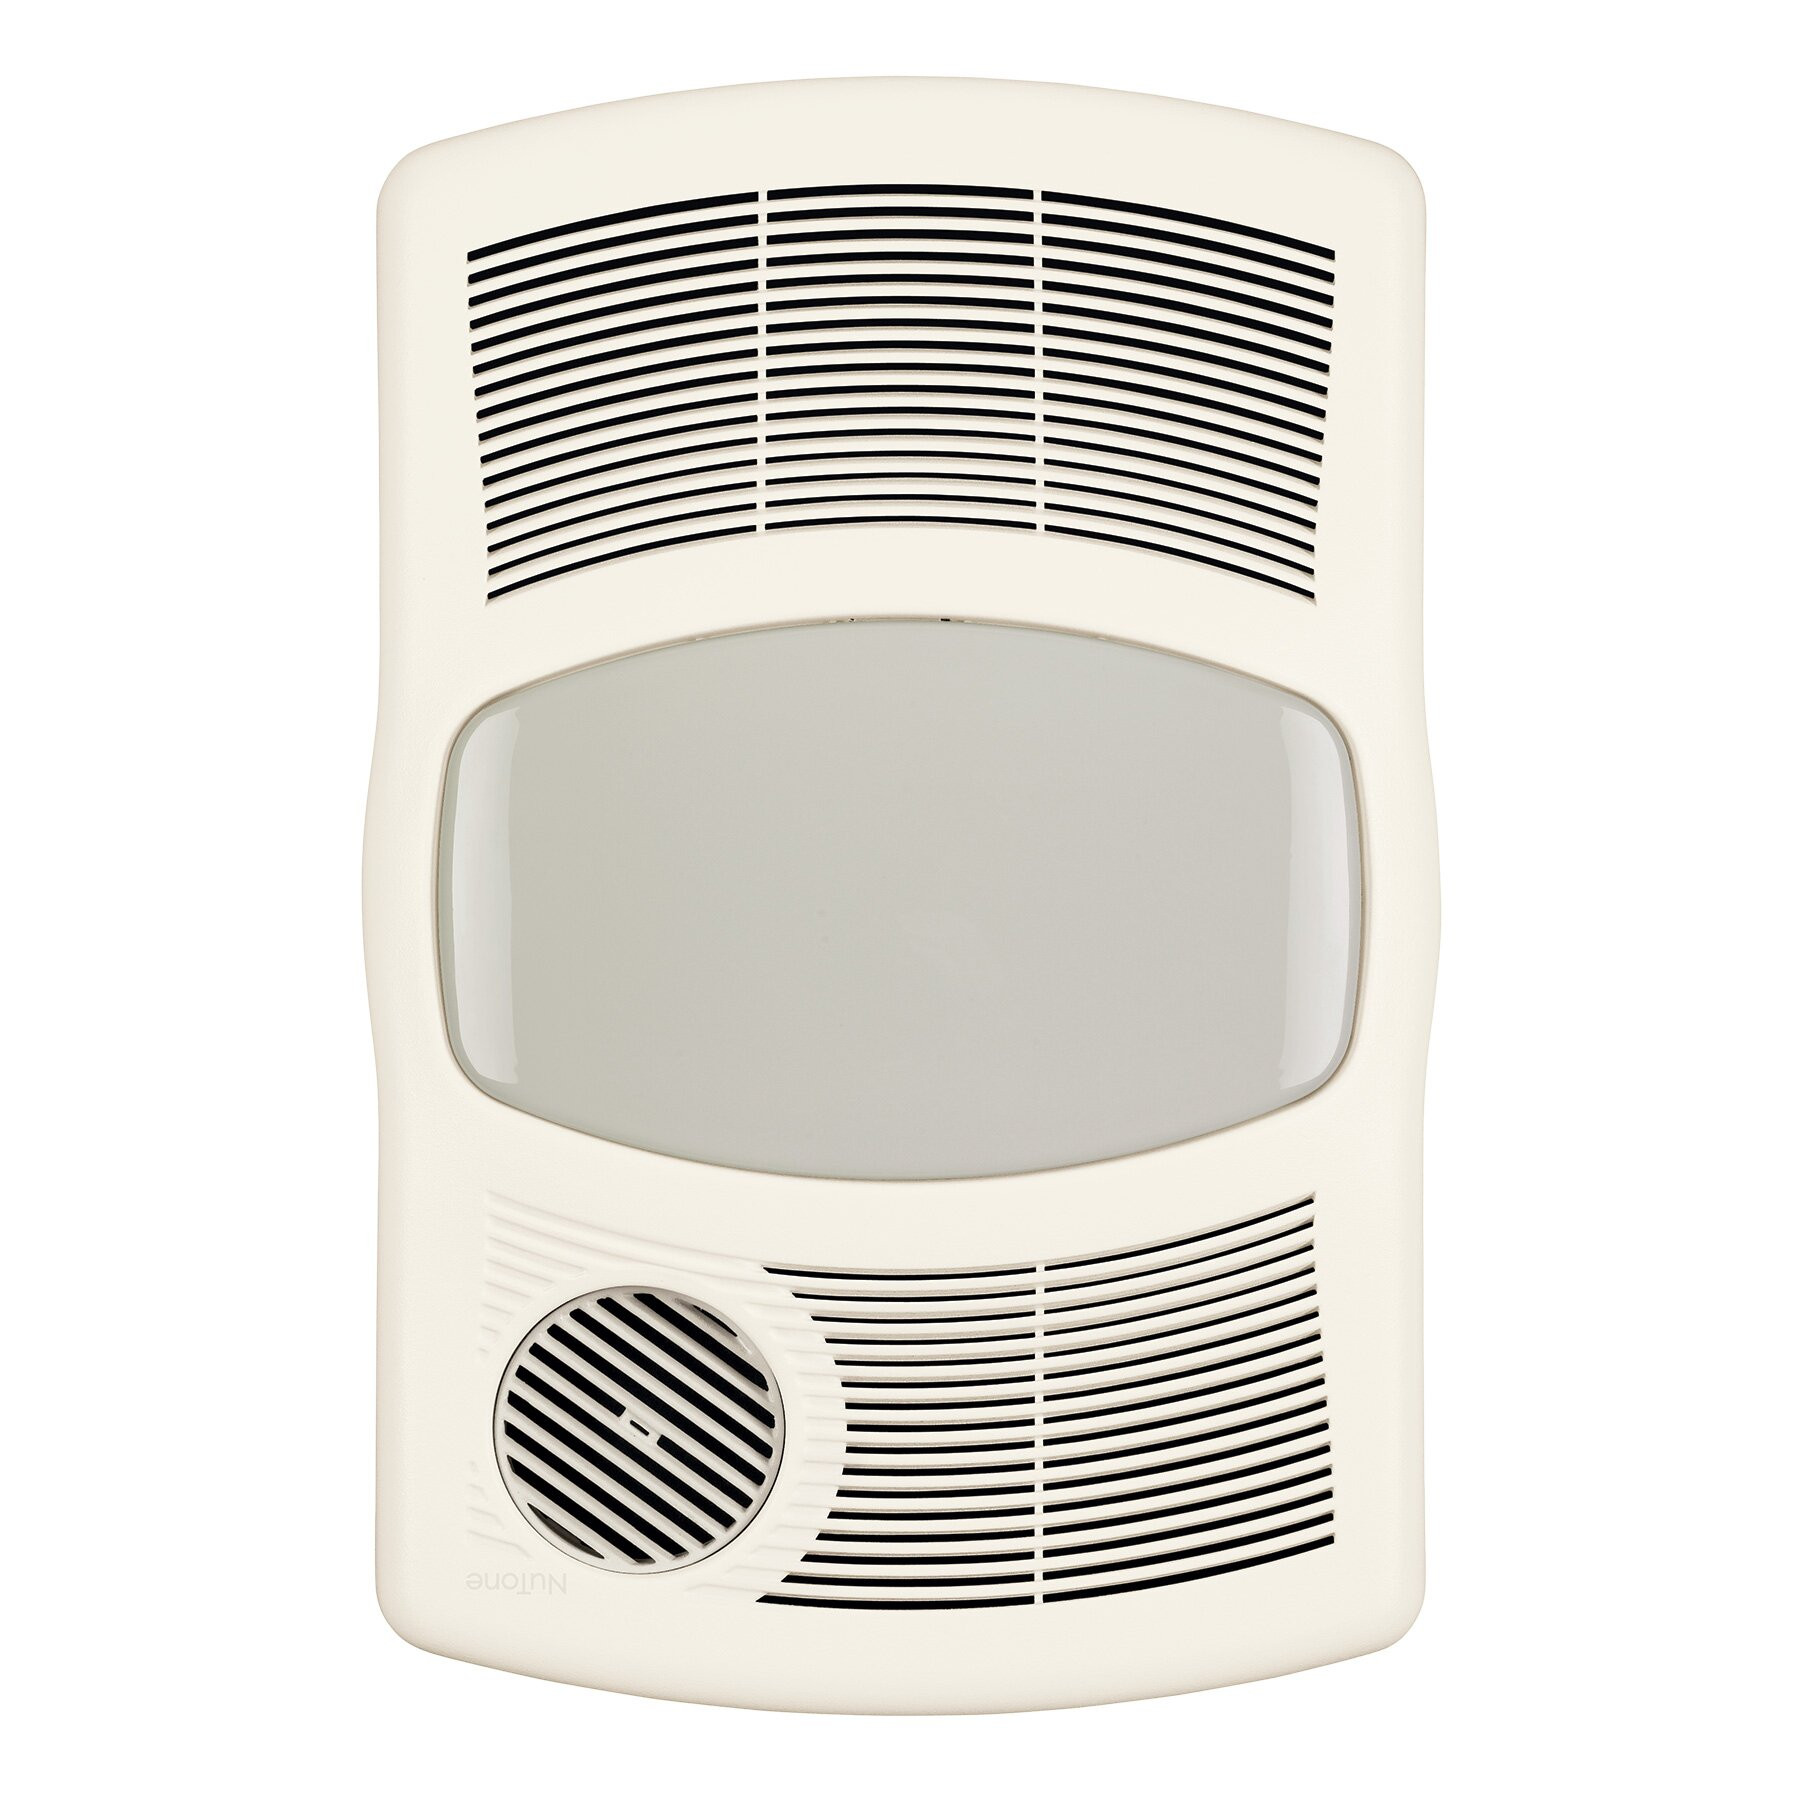 Exhaust Fan For Bathroom
 Broan 100 CFM Exhaust Bathroom Fan with Heater & Reviews